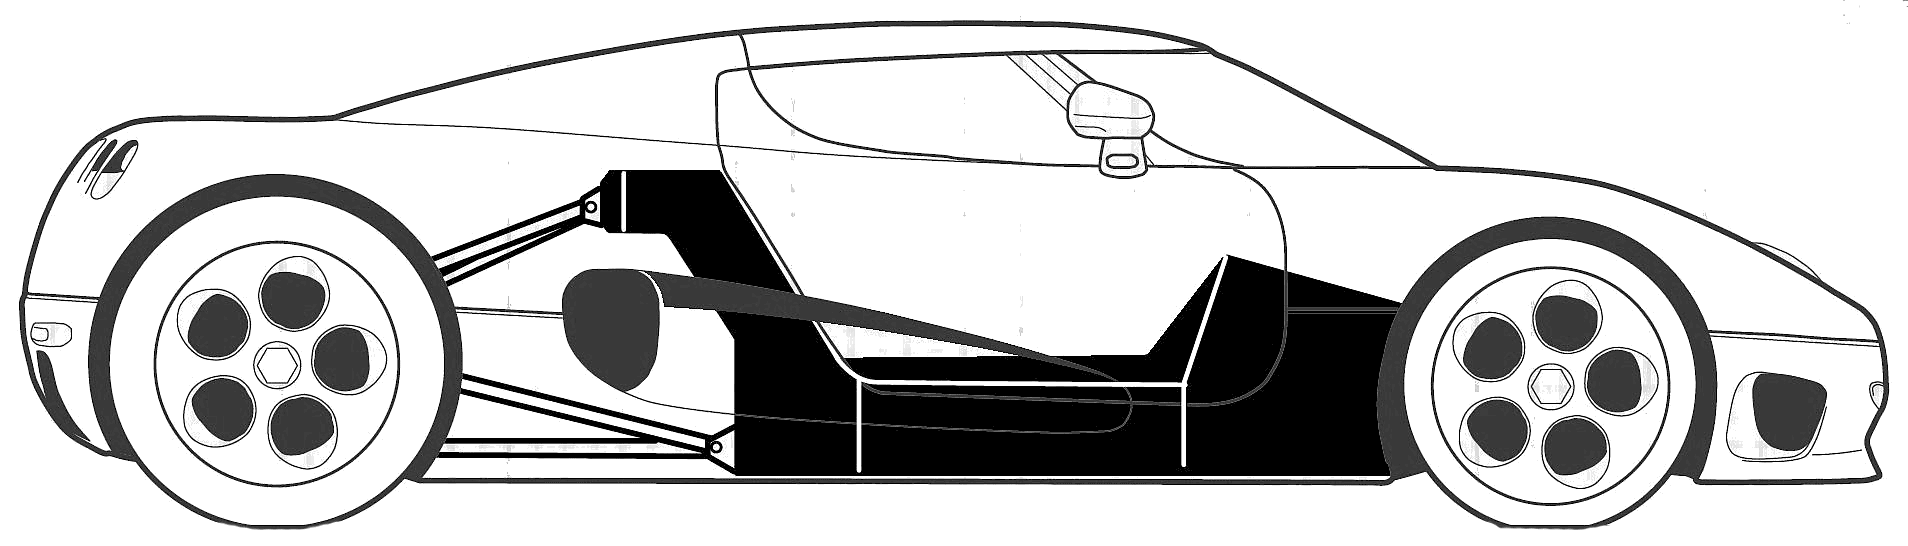 Cotxe Koenigsegg CC 2004